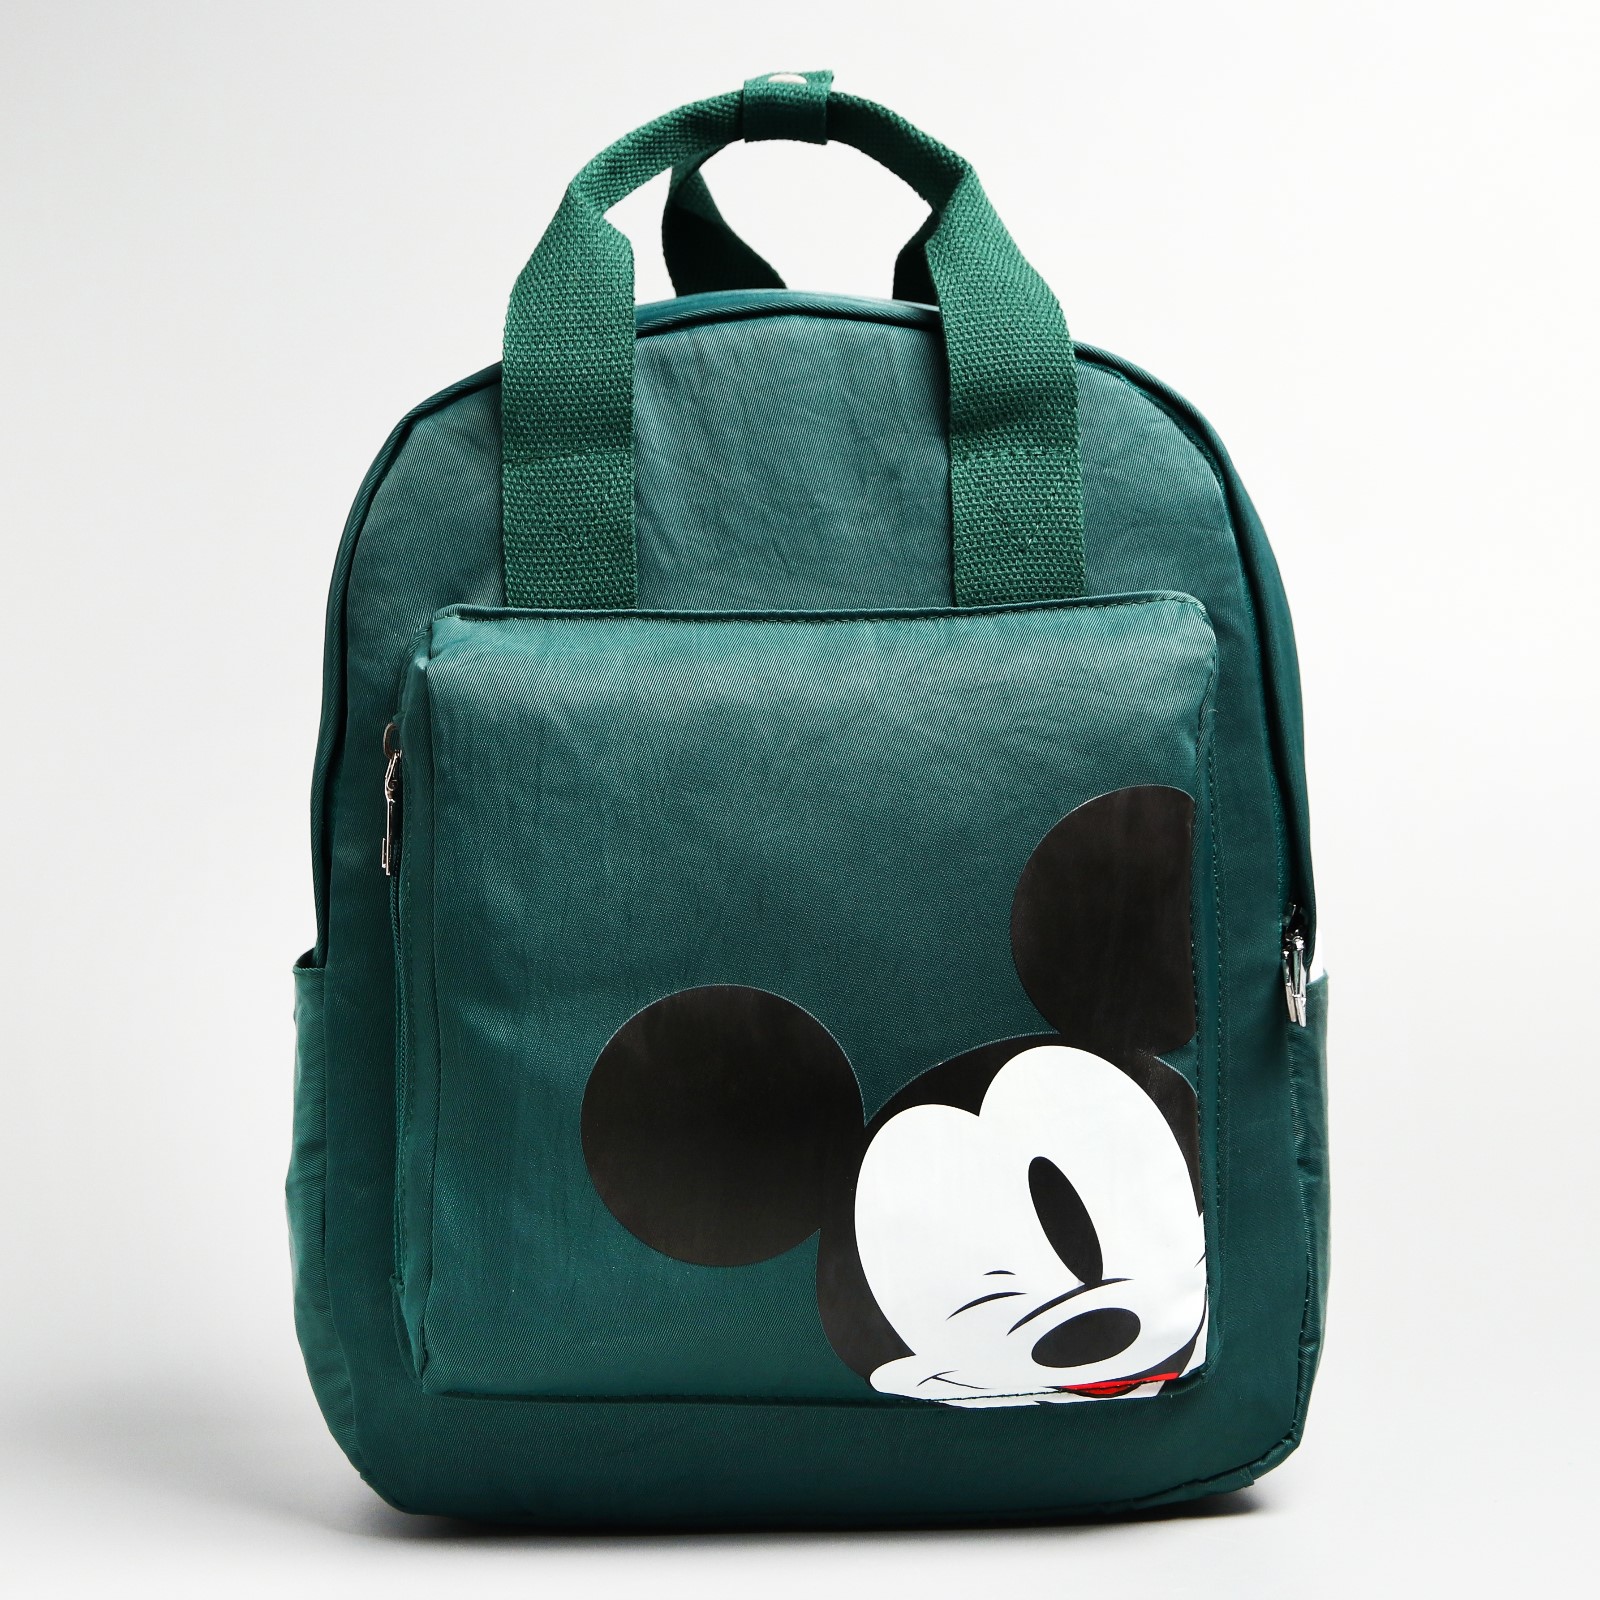 Рюкзак Disney на молнии зеленый - фото 1